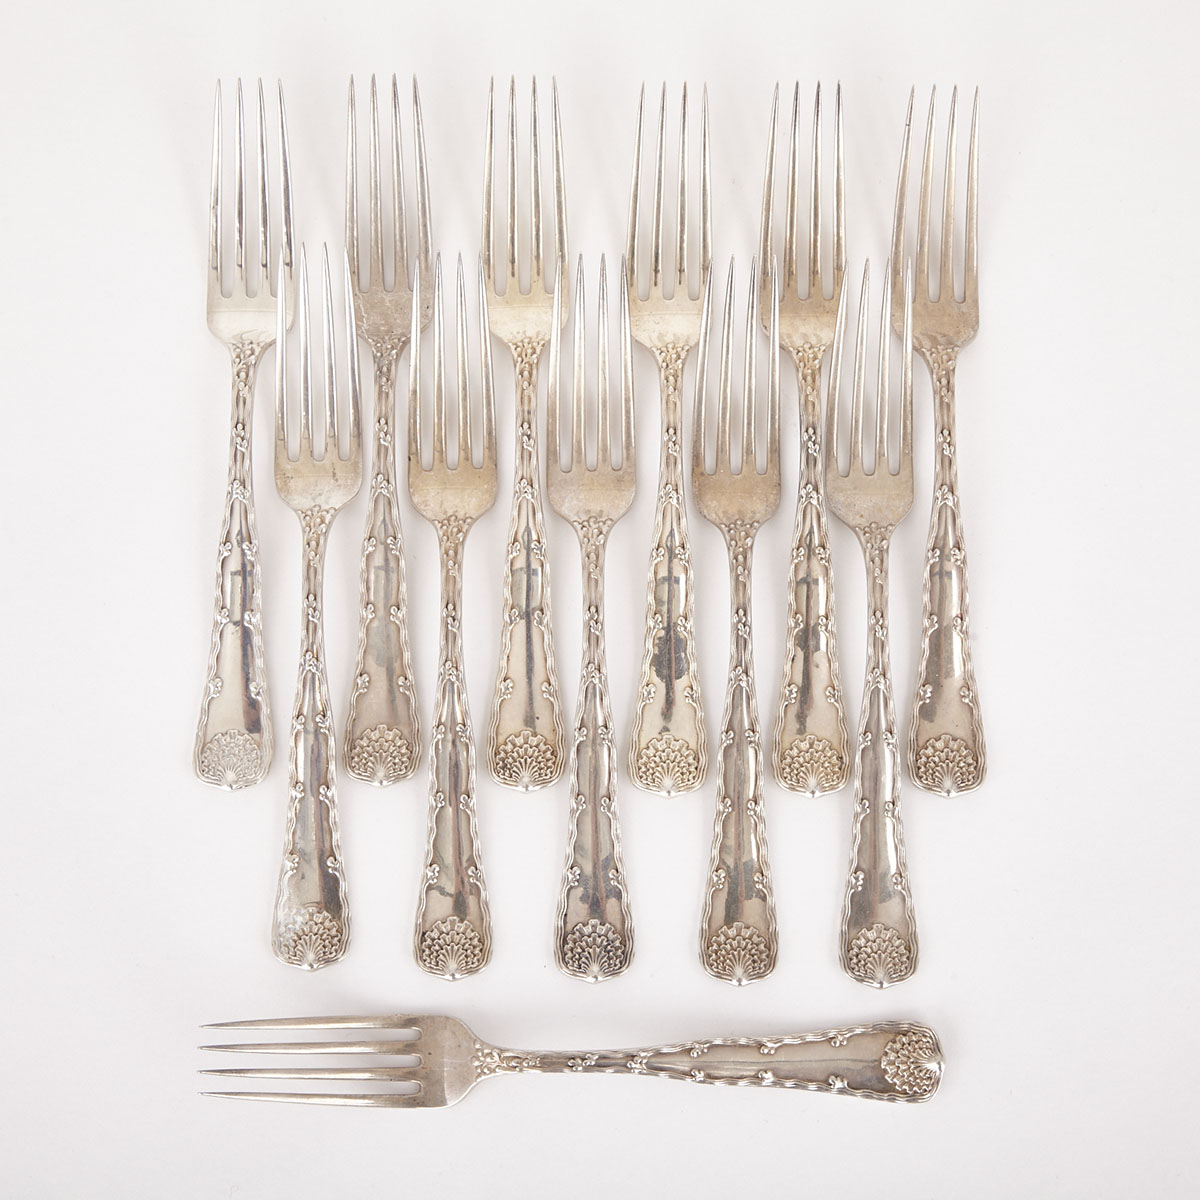 Twelve American Silver ‘Wave Edge’ Pattern Luncheon Forks, Tiffany & Co., New York, N.Y., 20th century